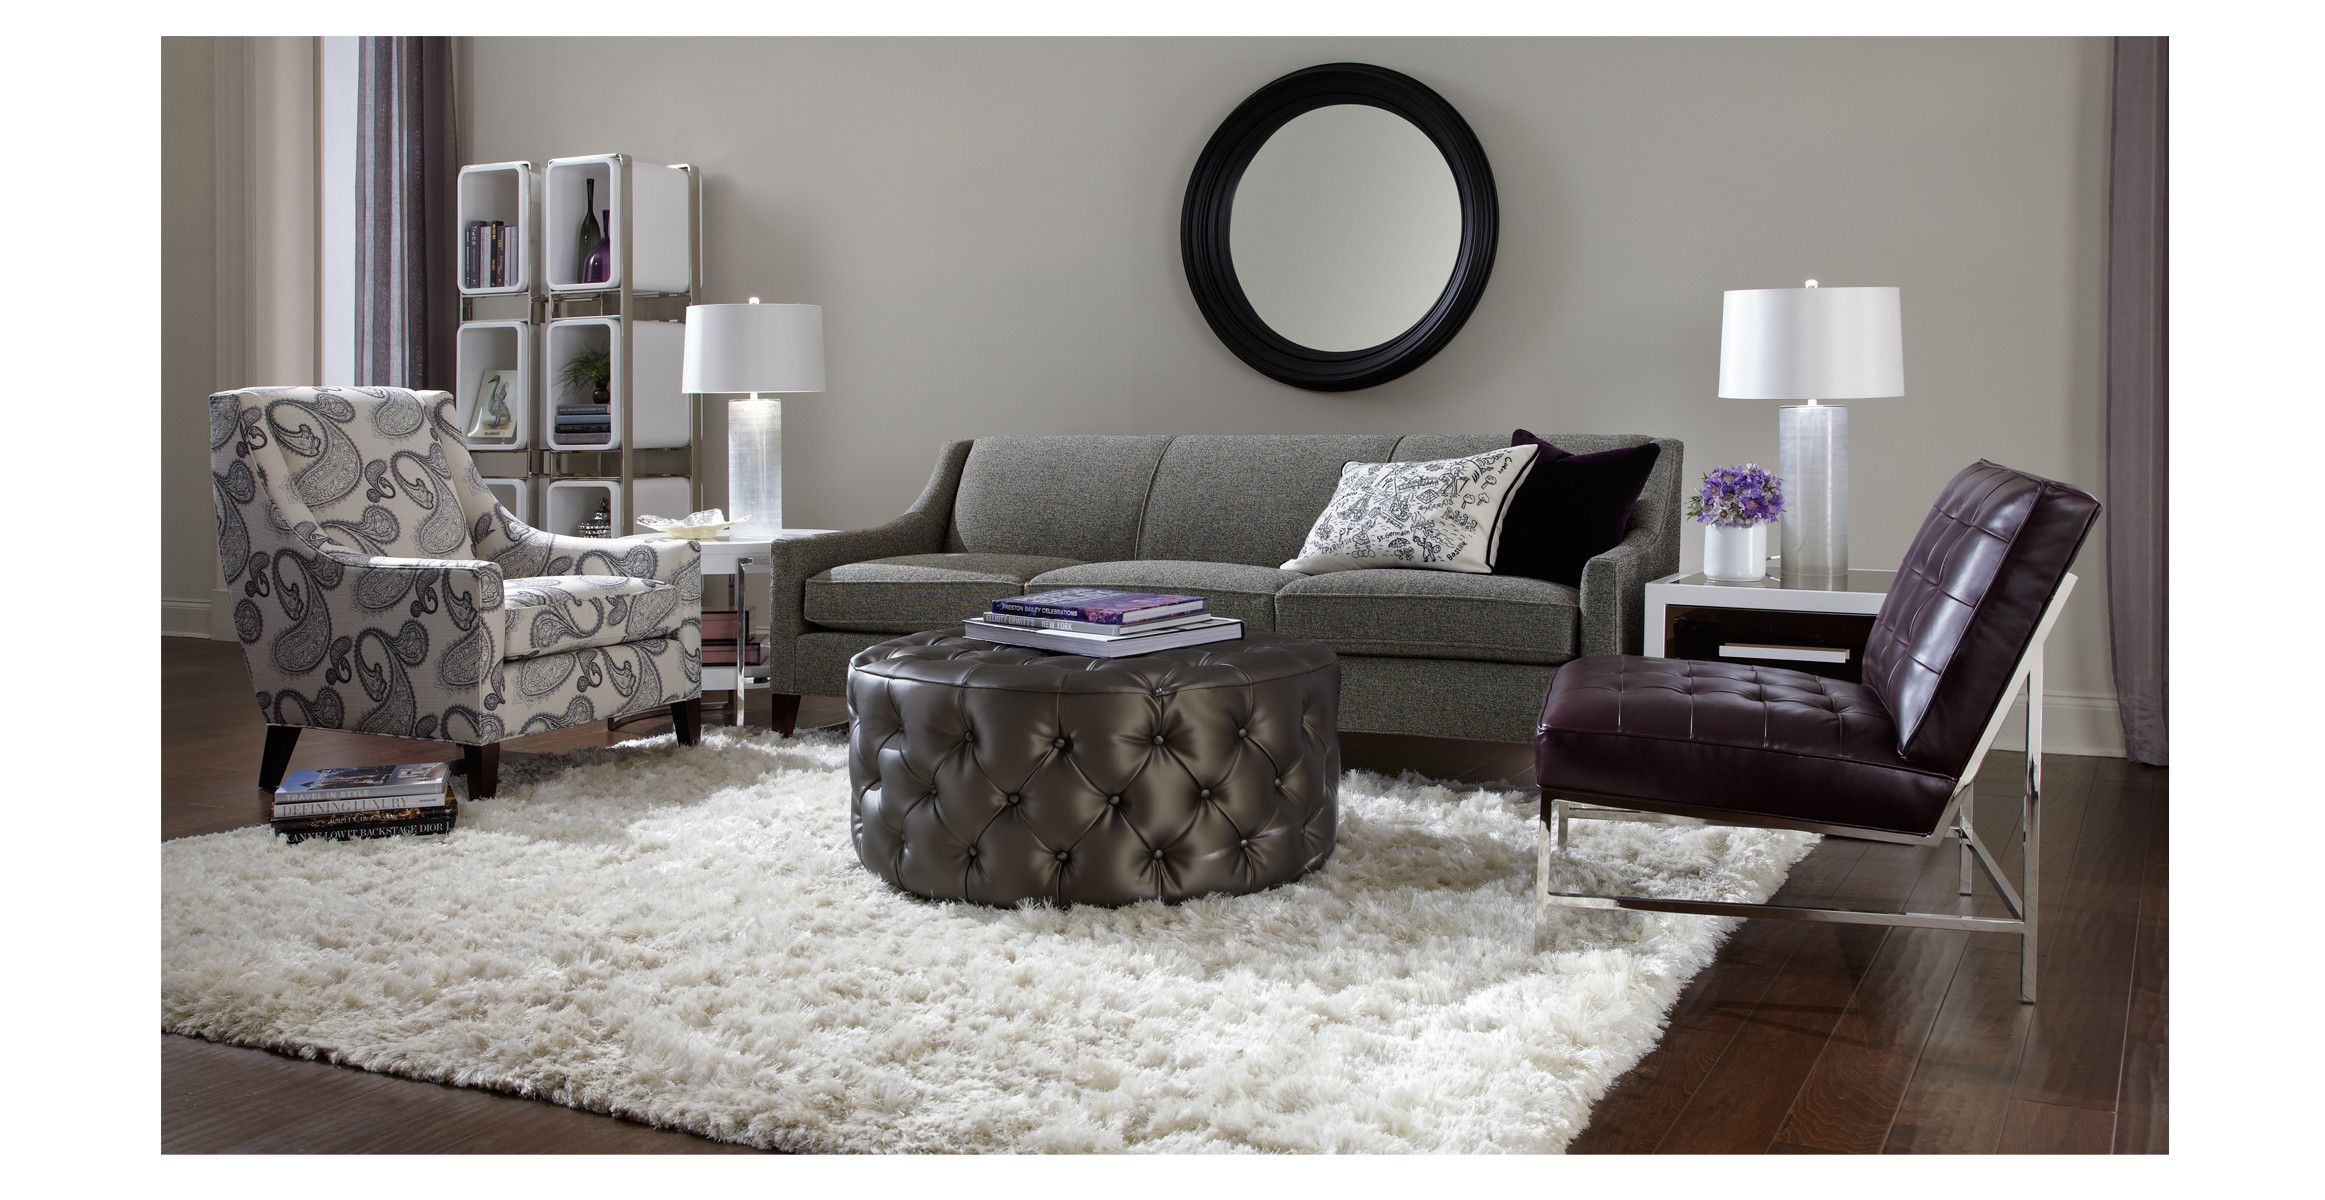 Living Room Area Rugs 8X10
 Decor & Accessories Exciting Shag Rug 8x10 Design Ideas